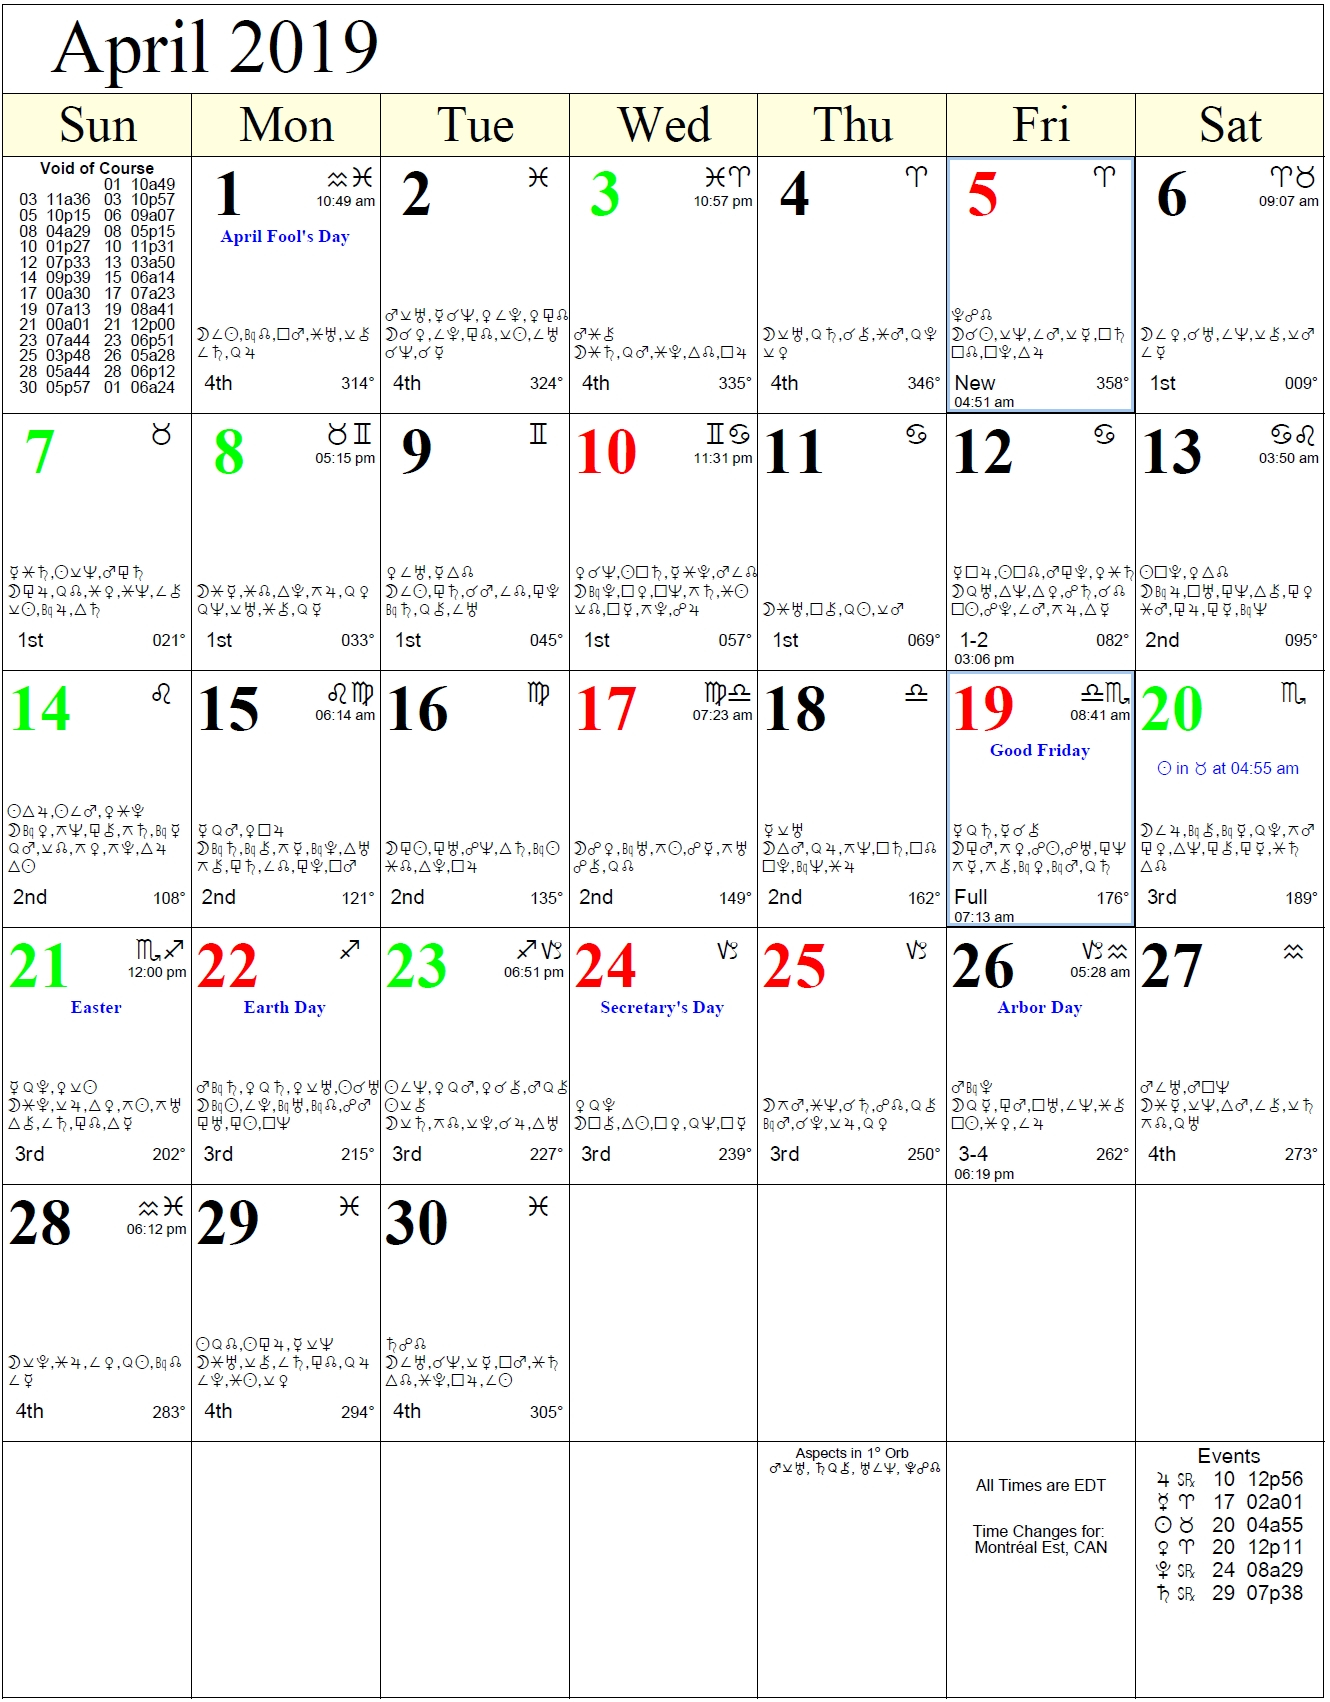 Lunar Calendar With Zodiac Signs | Month Calendar Printable regarding Moon Calendar With Astrological Time To Print Free